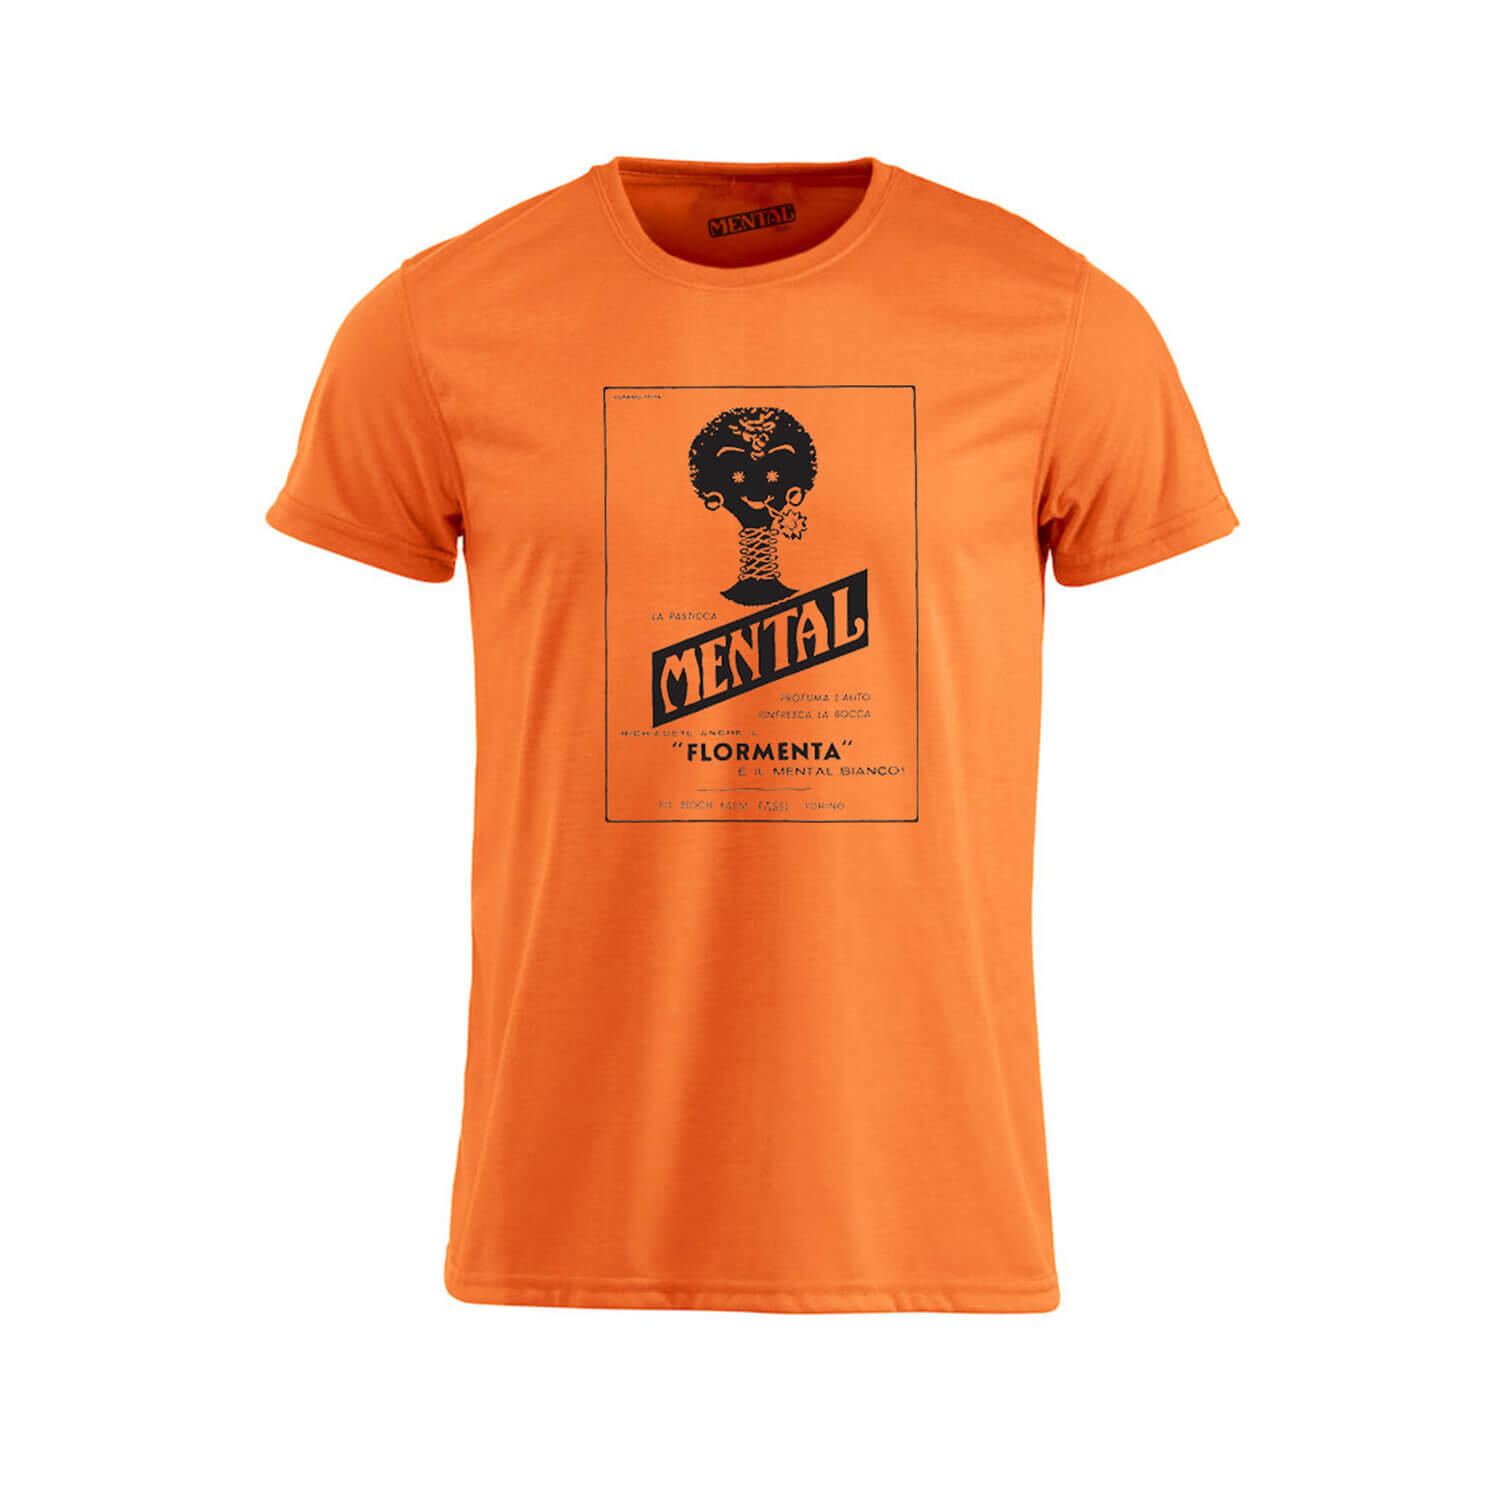 T-shirt orange Vintage Mental - size M - T-shirt